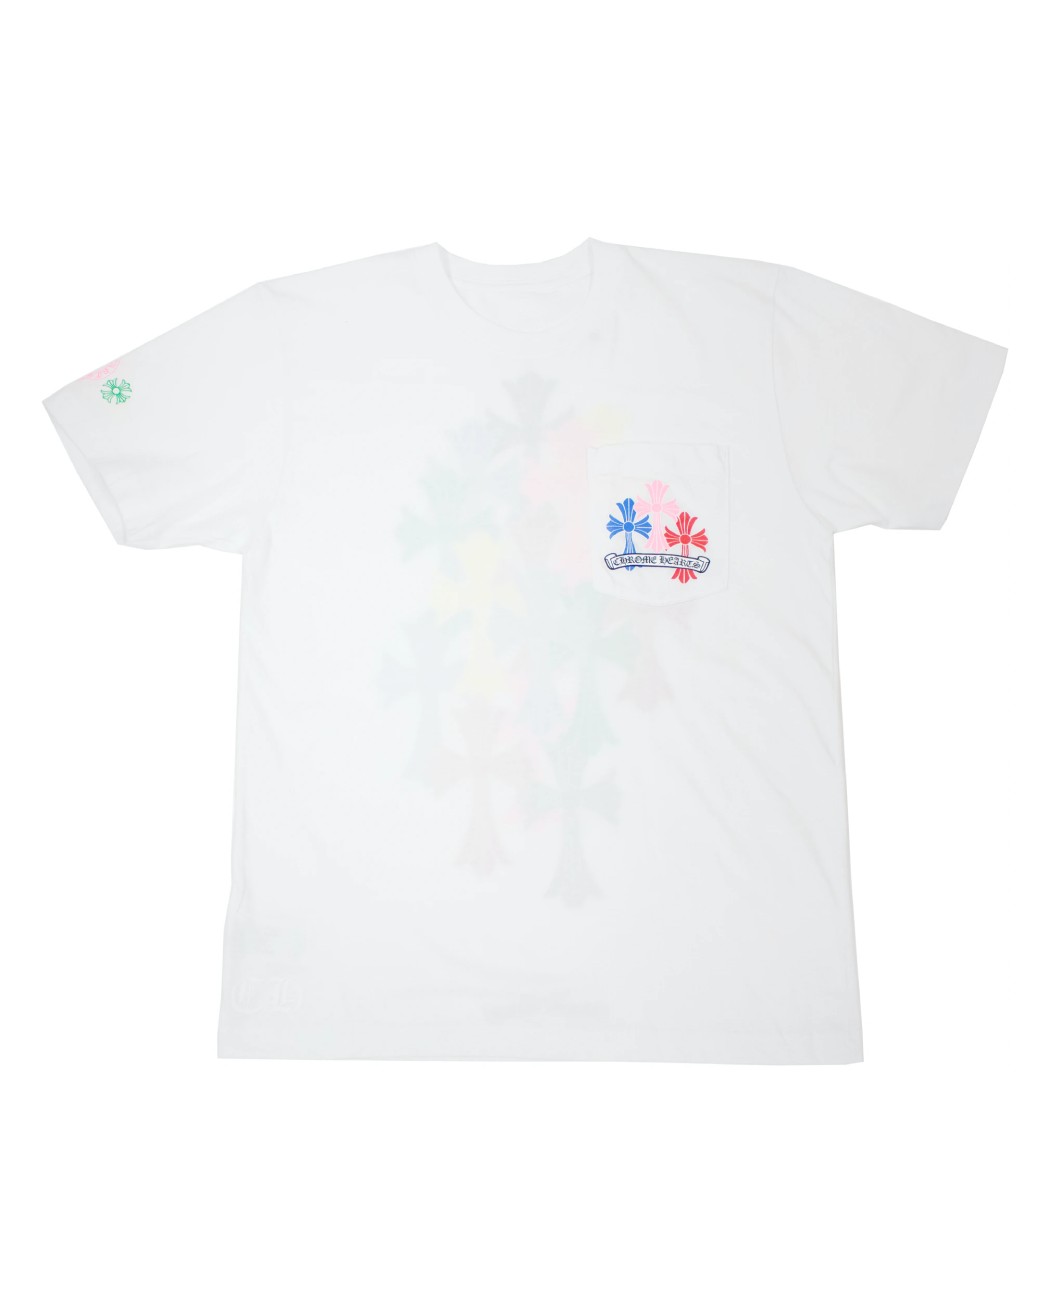 Chrome Hearts Cross Cemetery T-Shirt – Multi Color